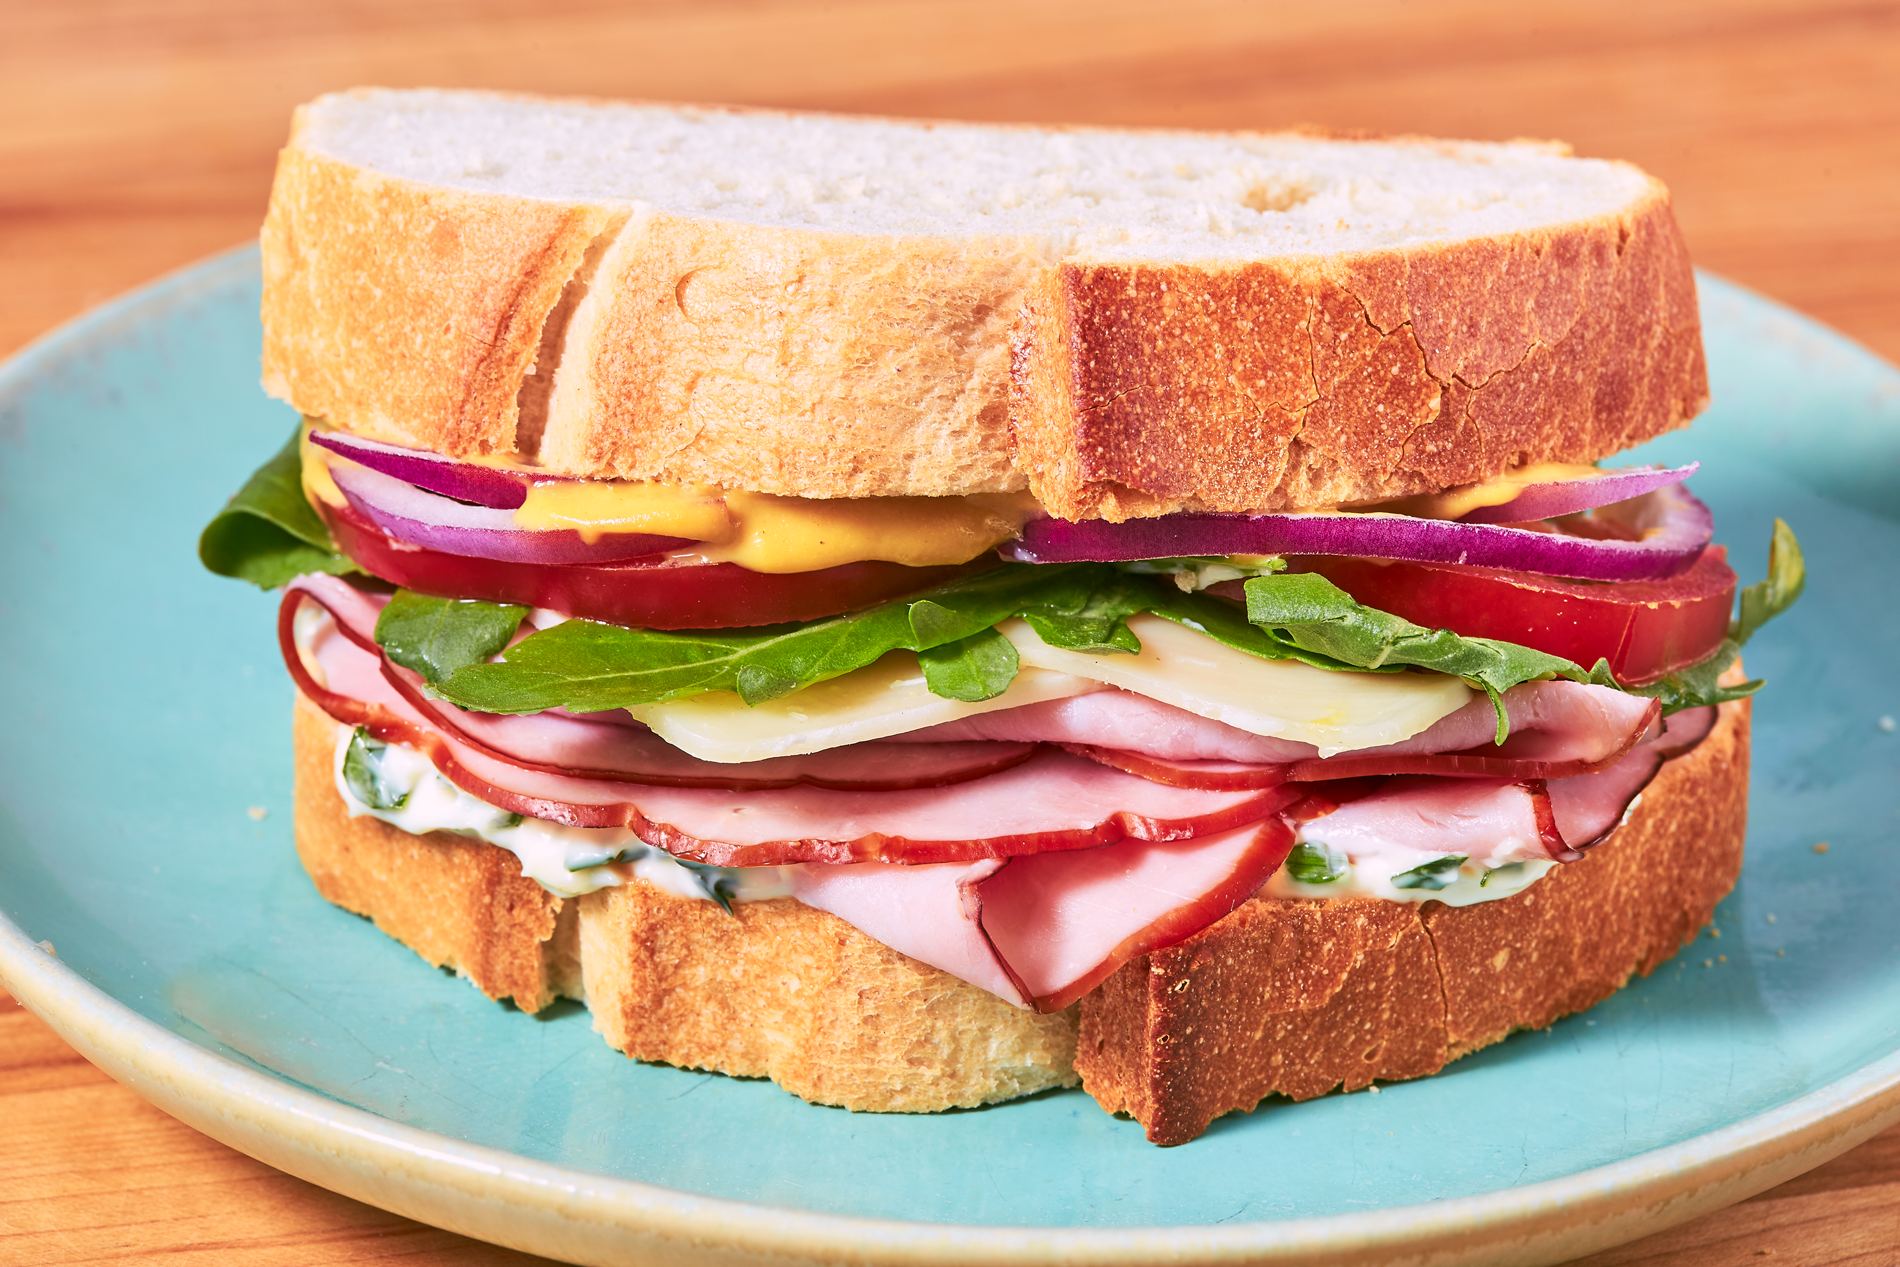 enjoy every sandwich you tube